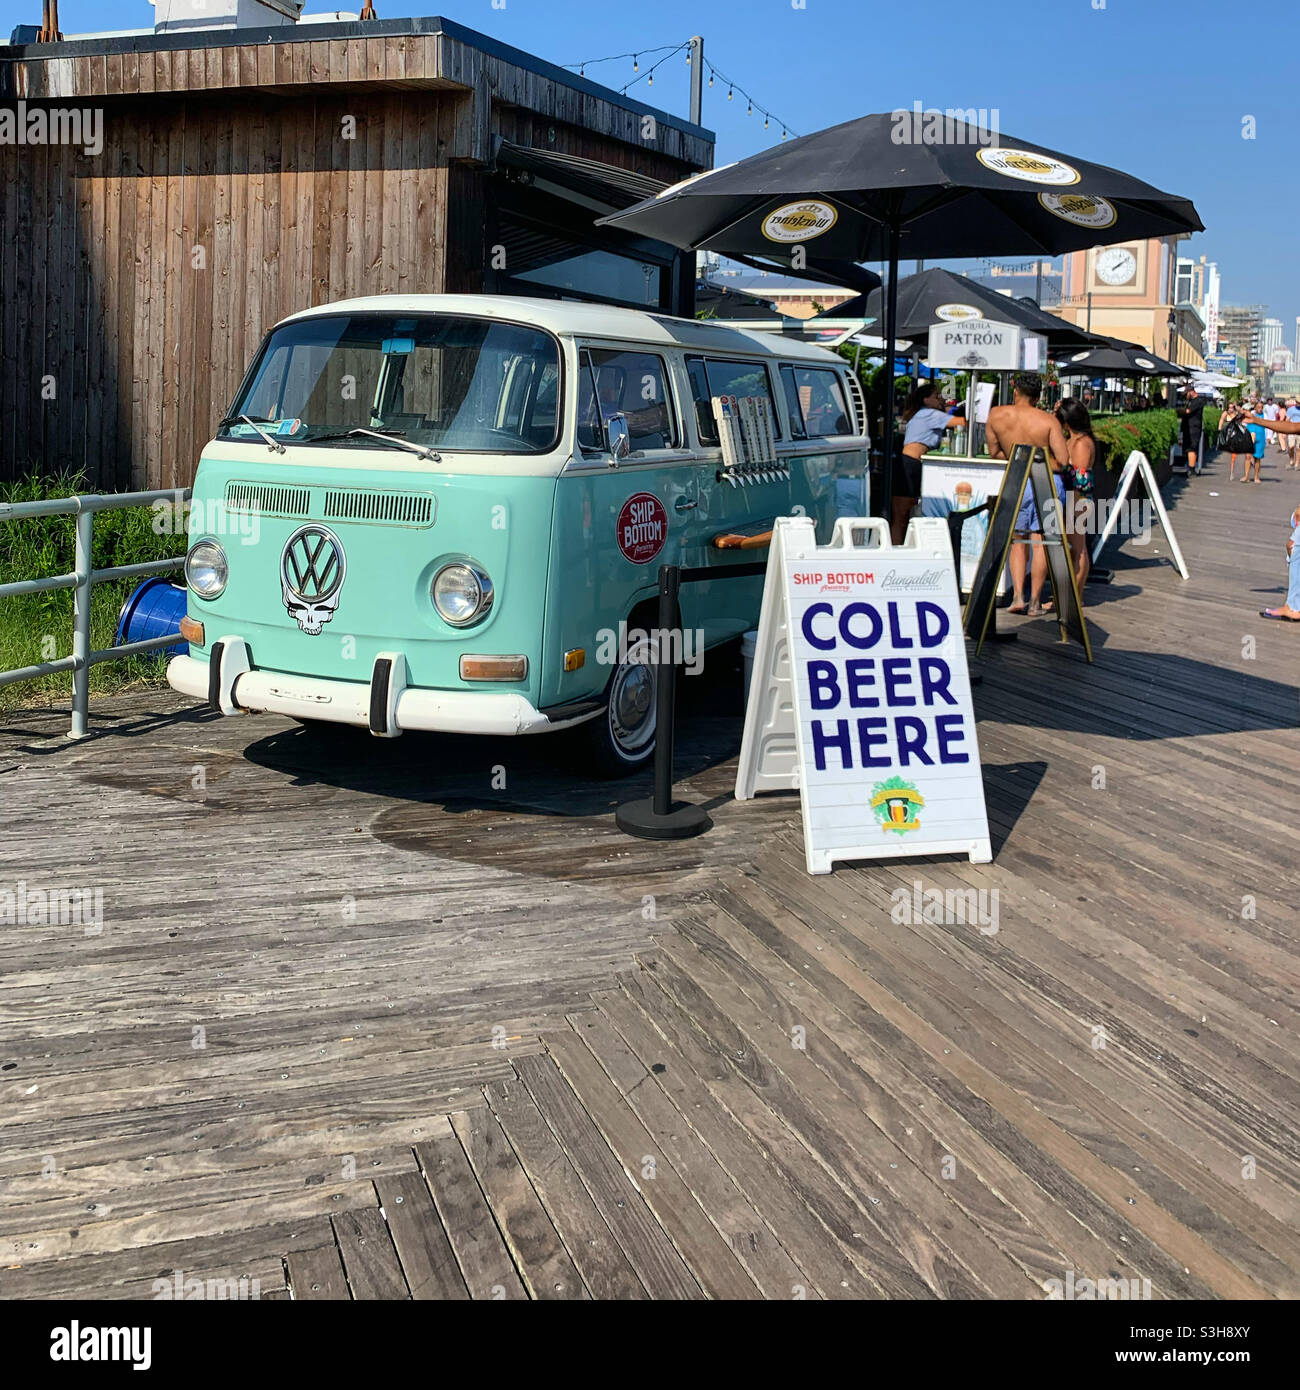 July, 2021, Ship Bottom Brewing, Atlantic City Boardwalk, Atlantic City, New Jersey, United States Stock Photo